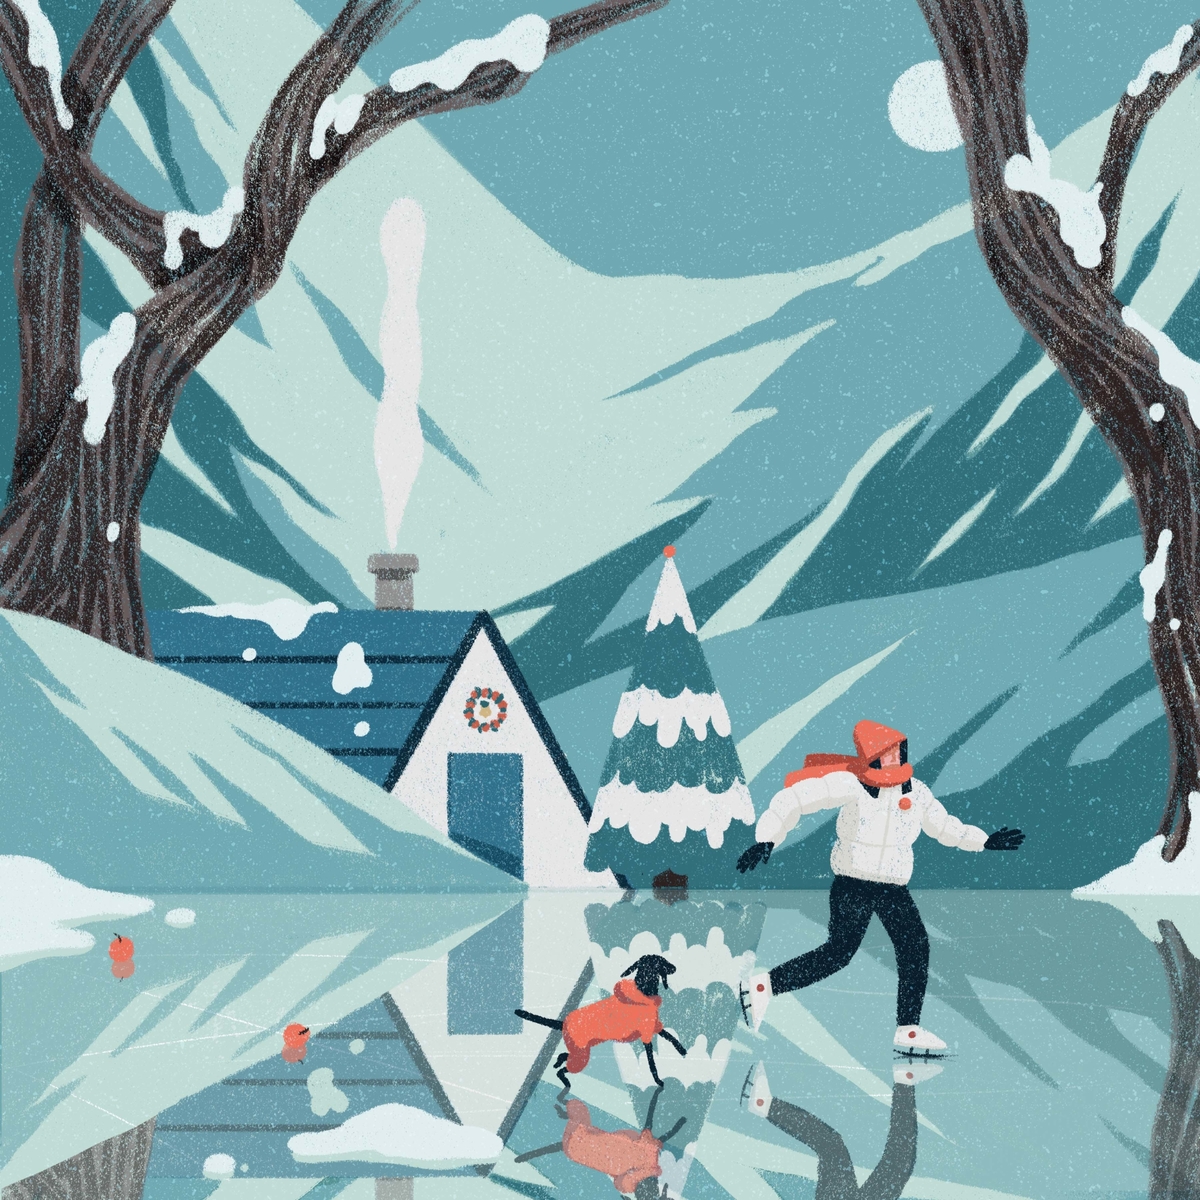 Winter by Folio Illustration Agency on Dribbble